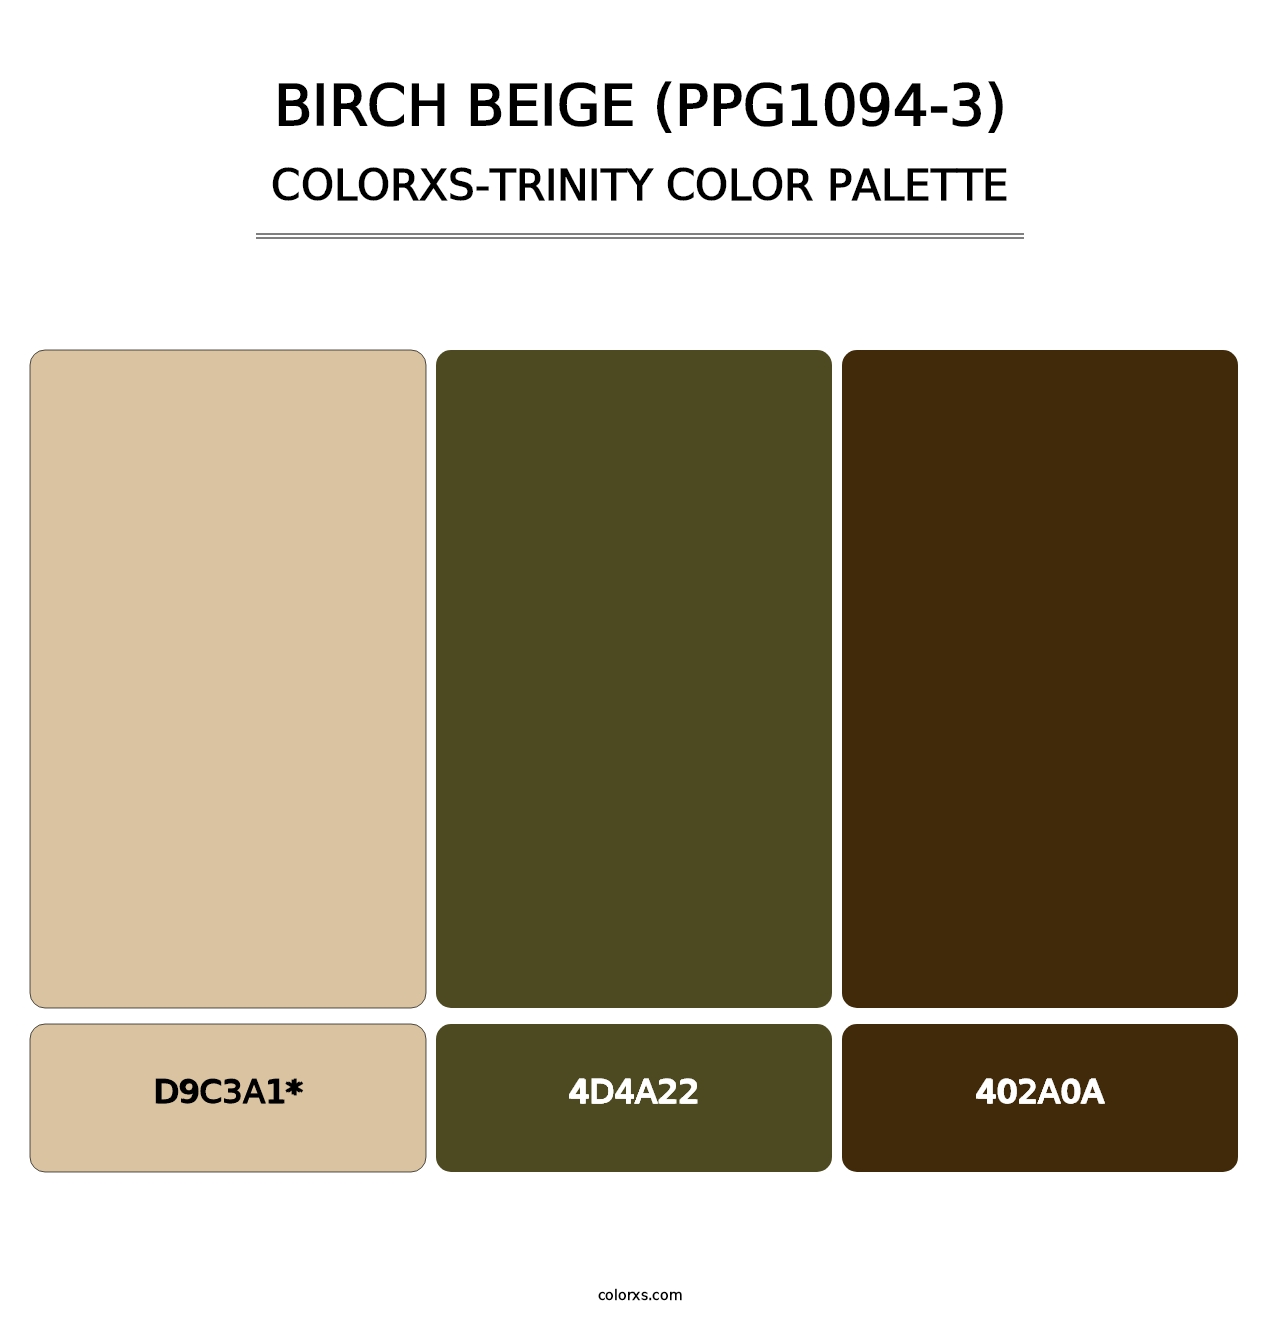 Birch Beige (PPG1094-3) - Colorxs Trinity Palette